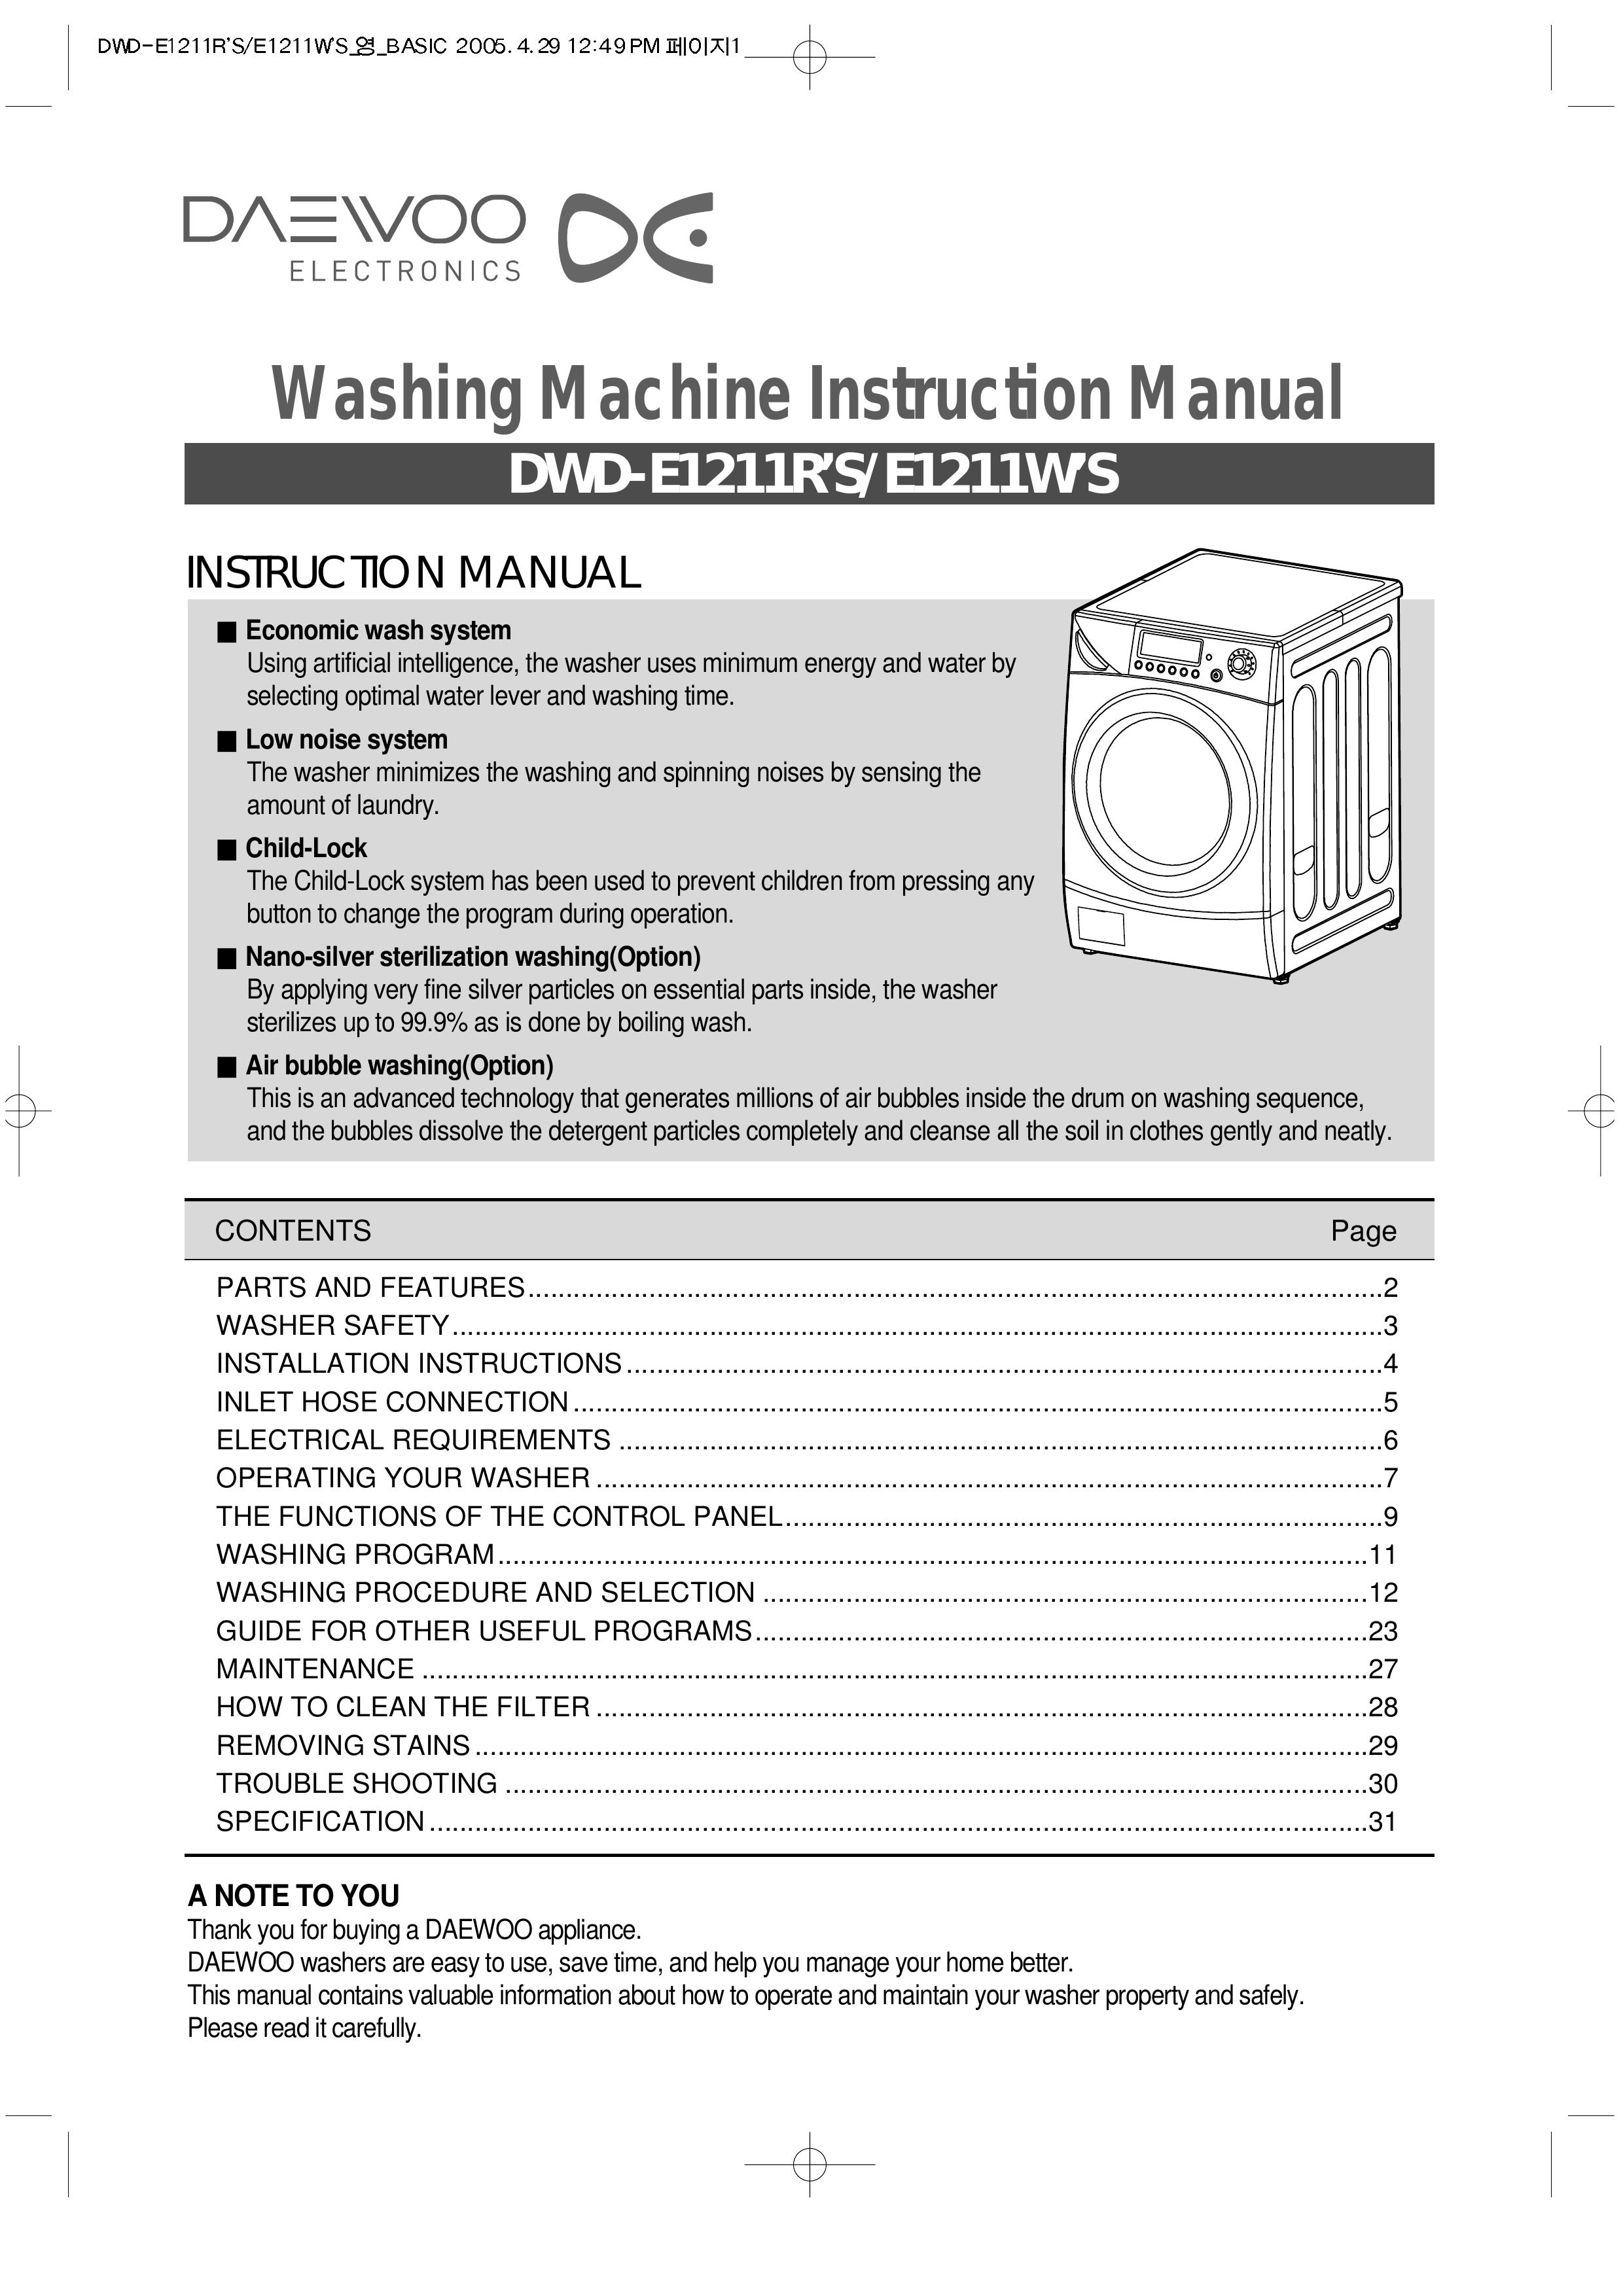 Daewoo DWD-E1211W'S Washer User Manual